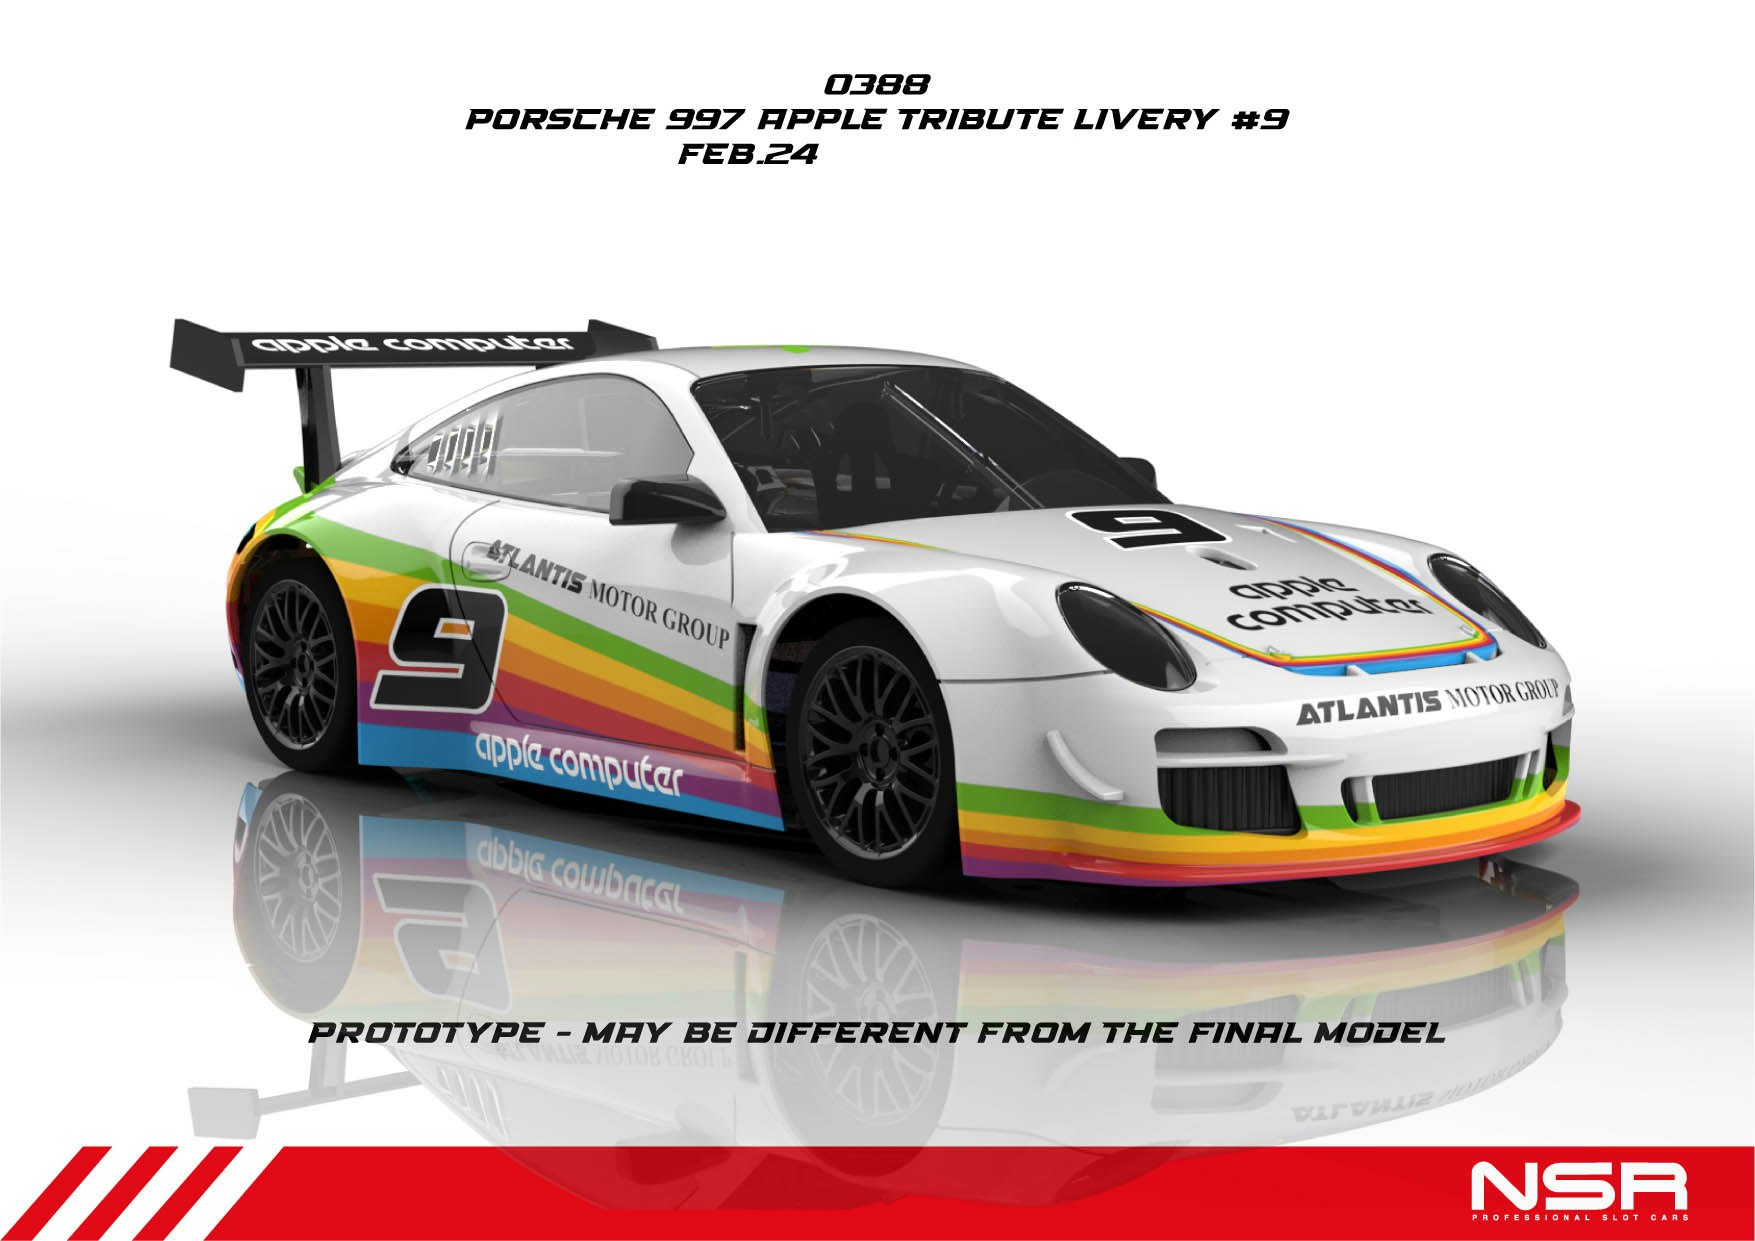 NSR - Porsche 997 Apple Tribute Livery #9 AW KING 21K EVO3 - PREORDER - (Feb 24)